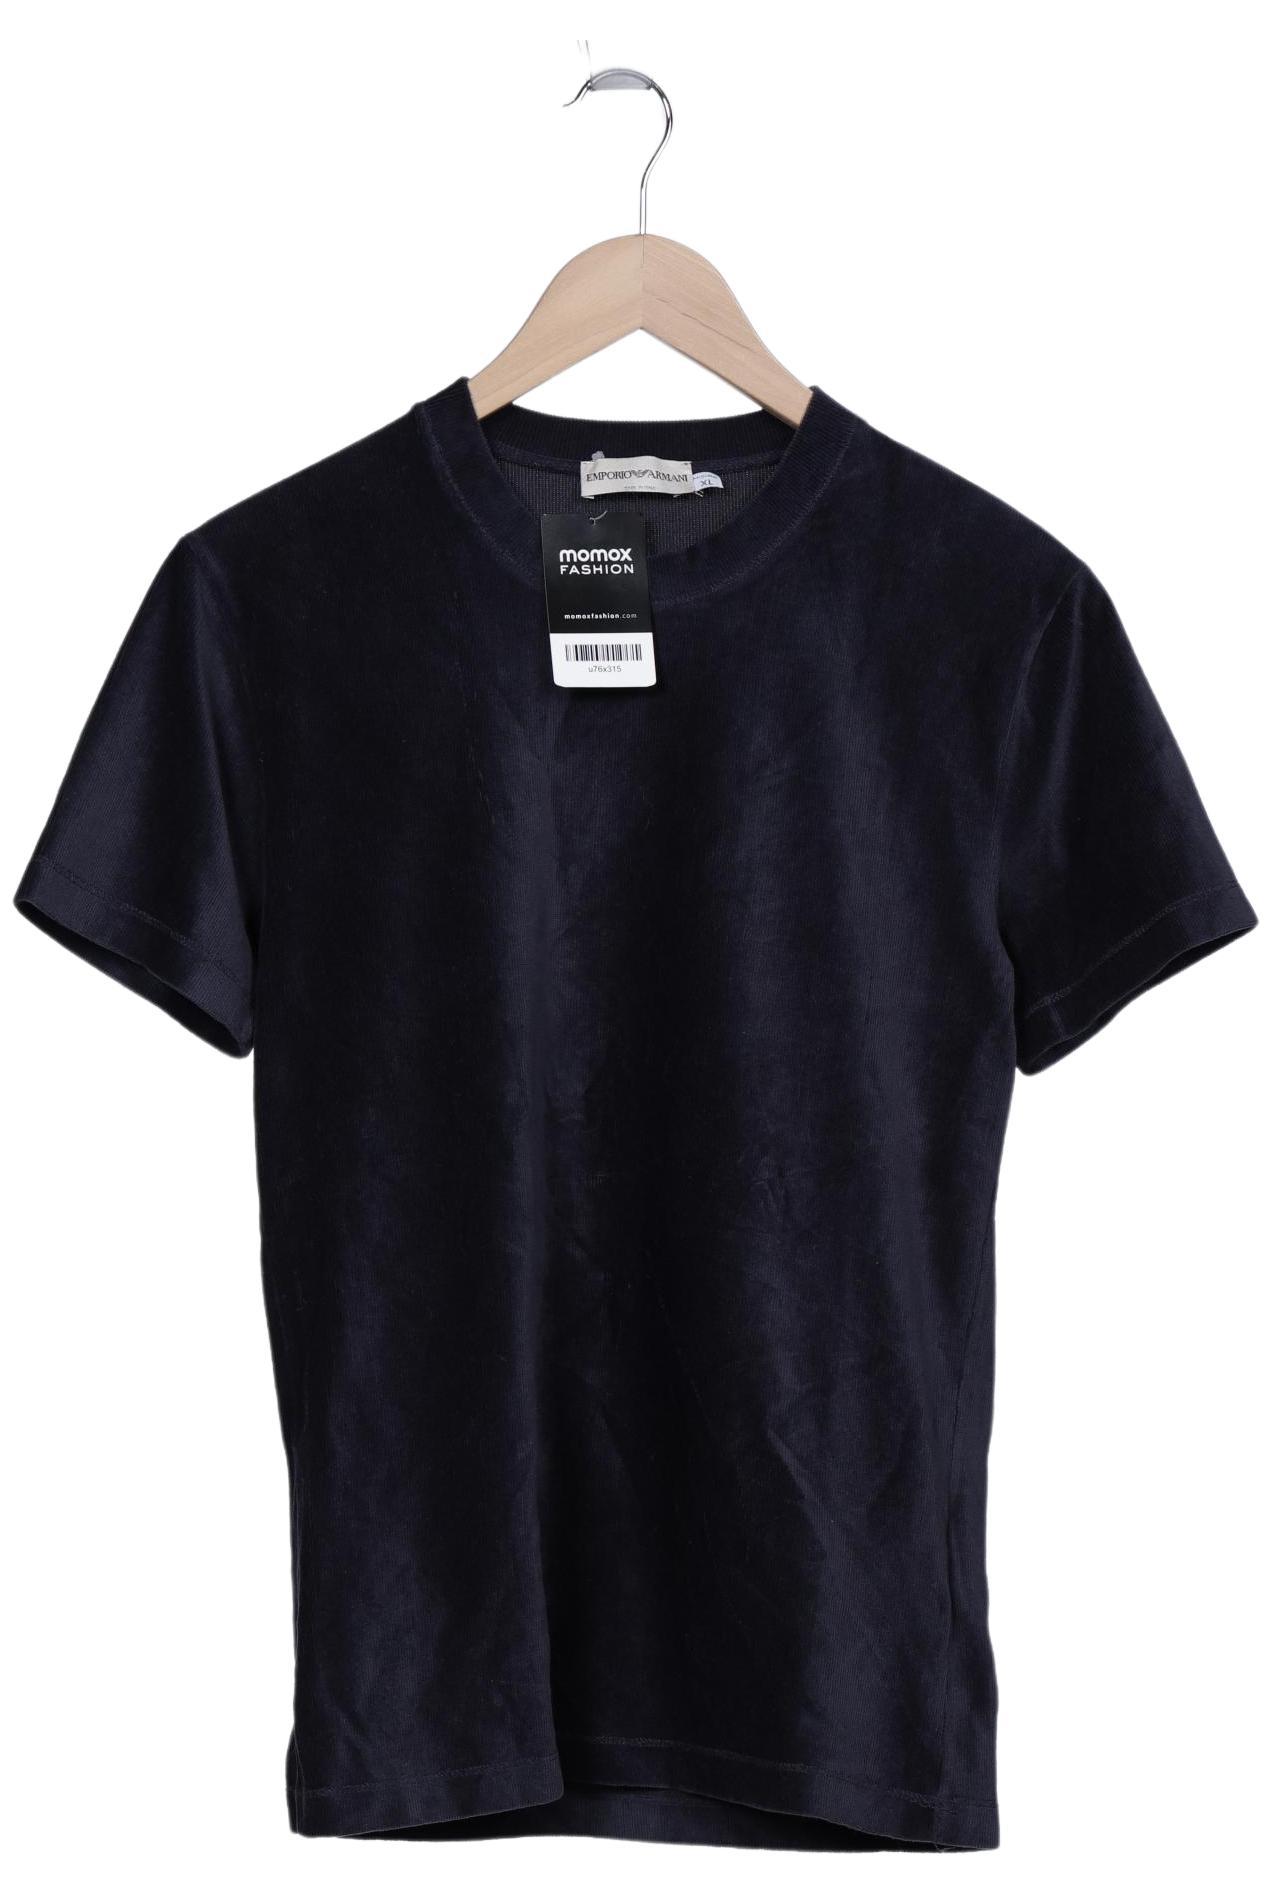 Emporio Armani Herren T-Shirt, marineblau, Gr. 54 von Emporio Armani